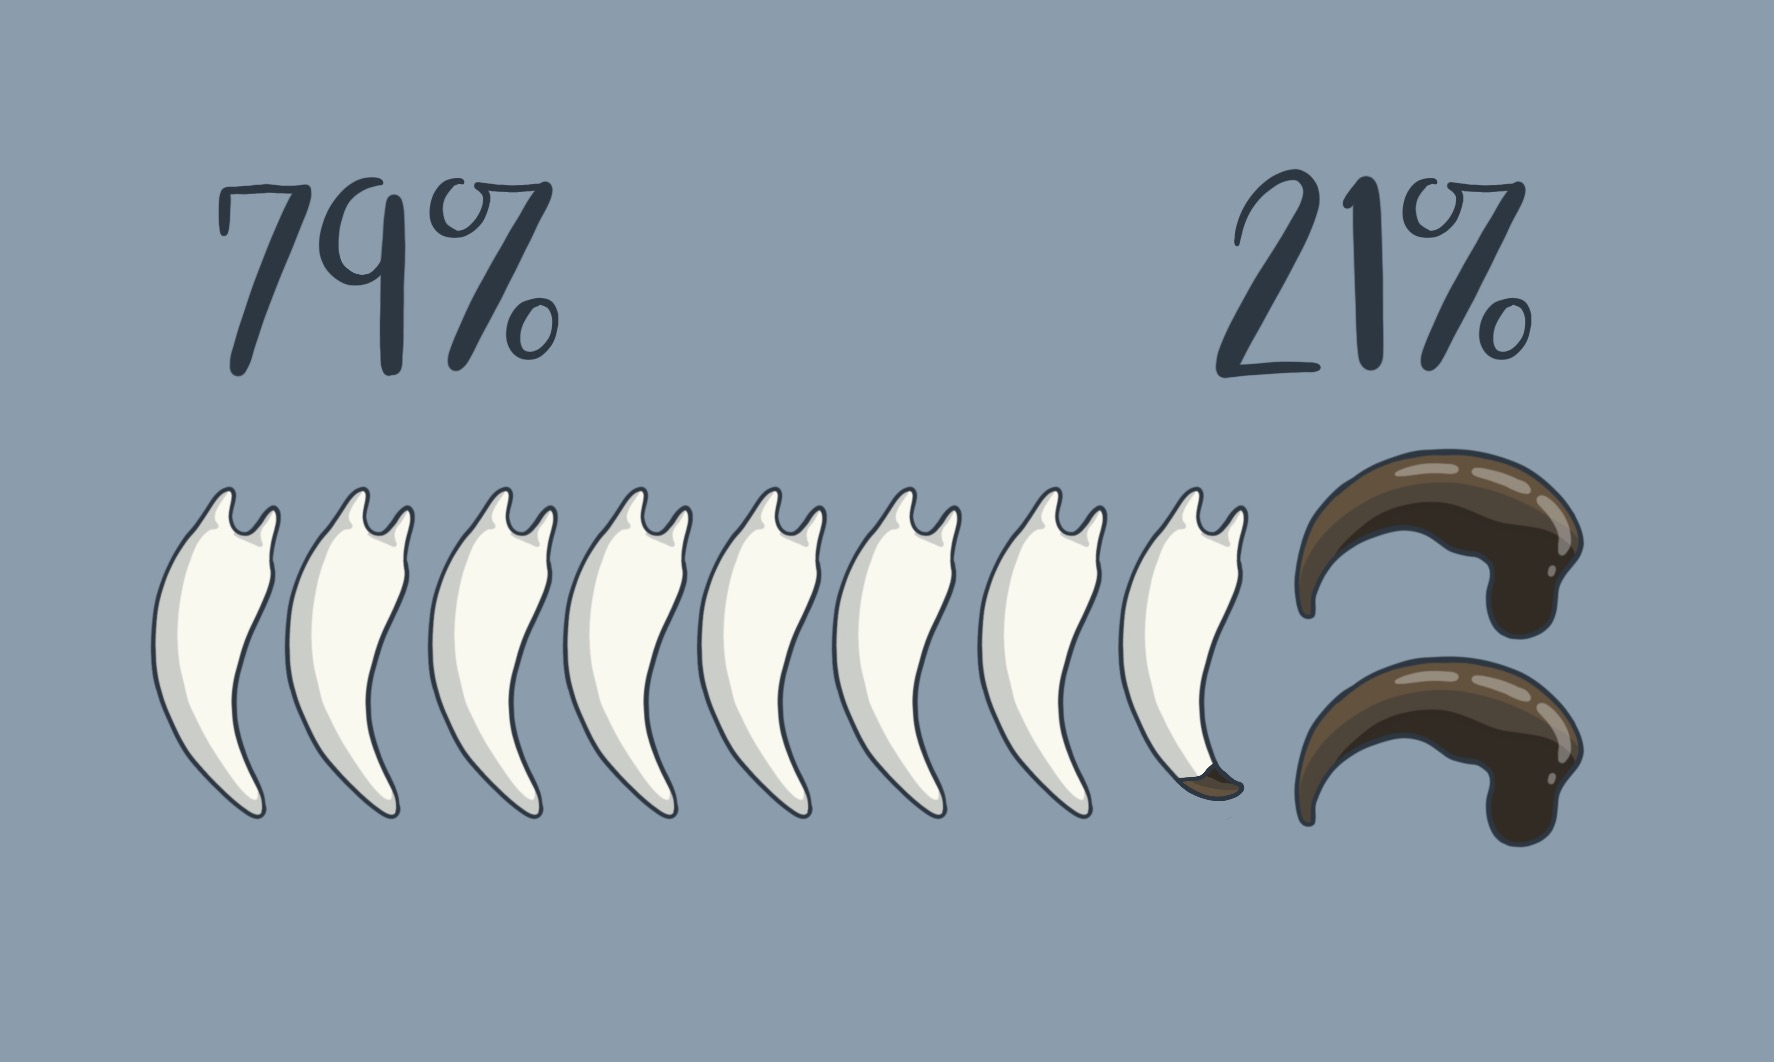 79% vampire teeth, 21% bear claws